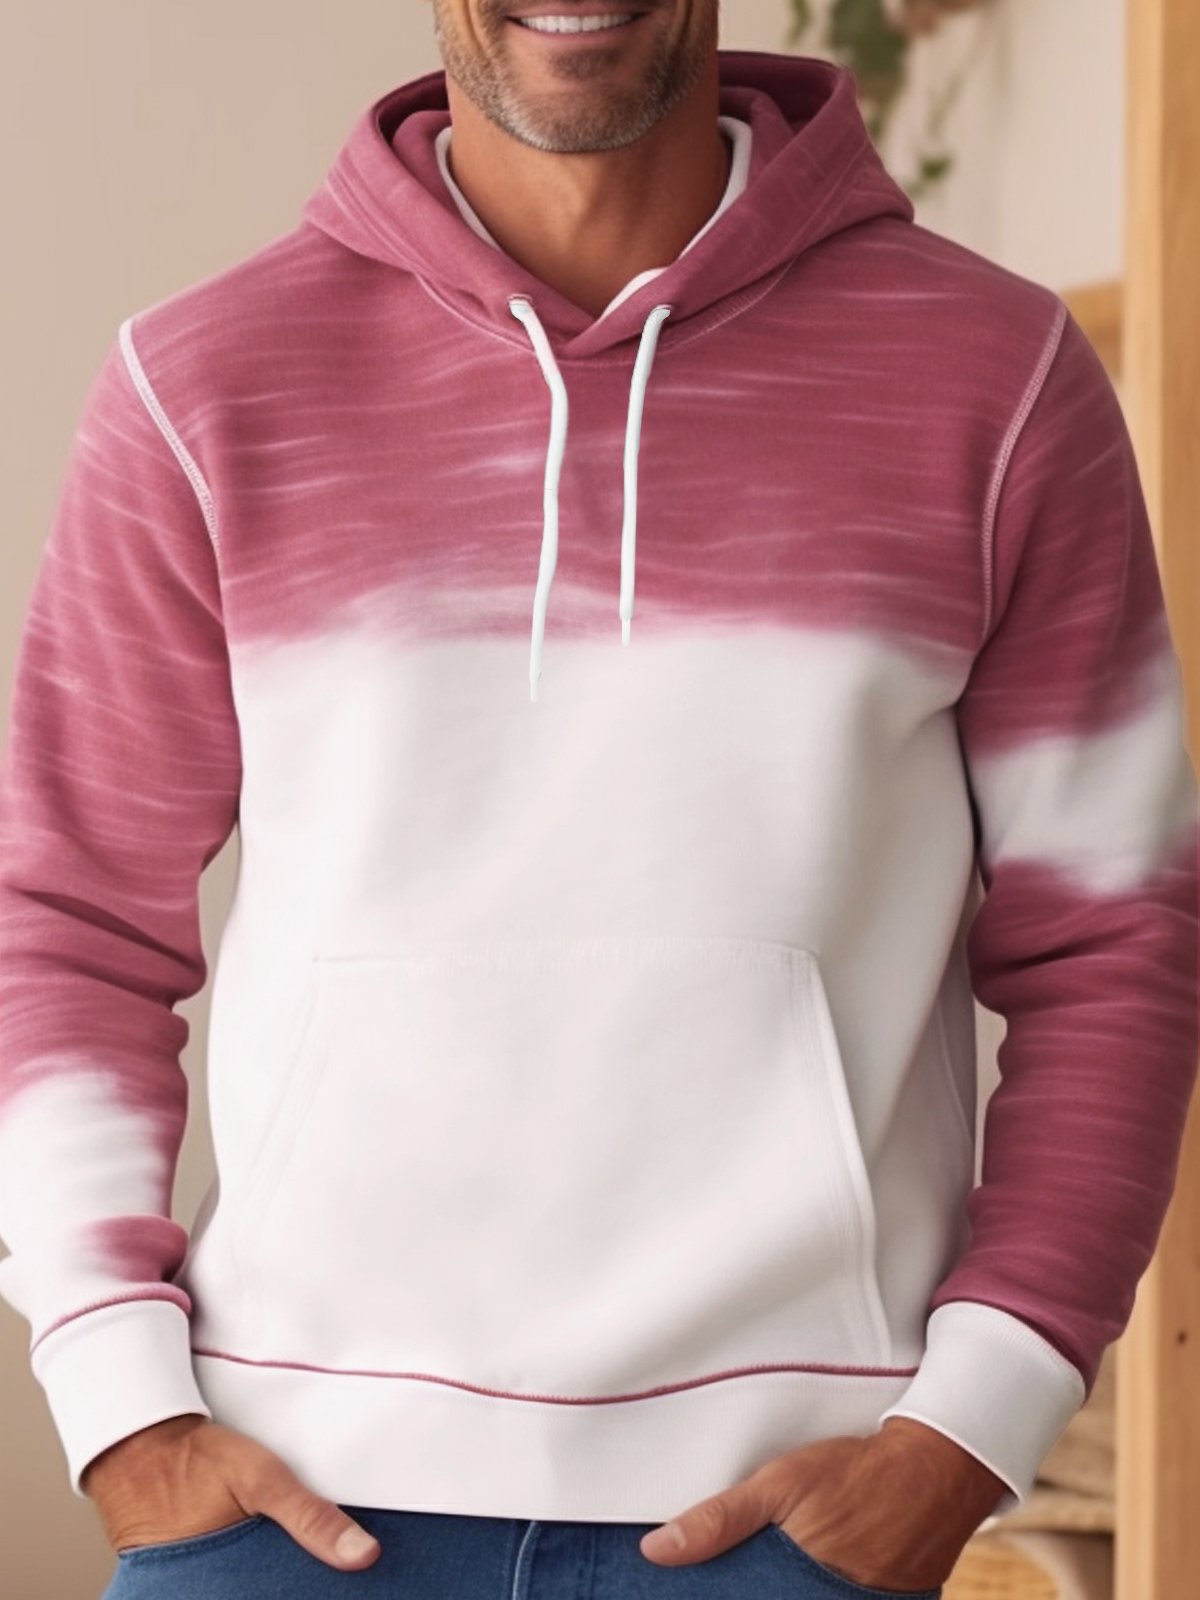 JoyMitty Vintage Gradient Texture Men's Drawstring Hoodies Stretch Large Size Art Fun Pullover Sweatshirts